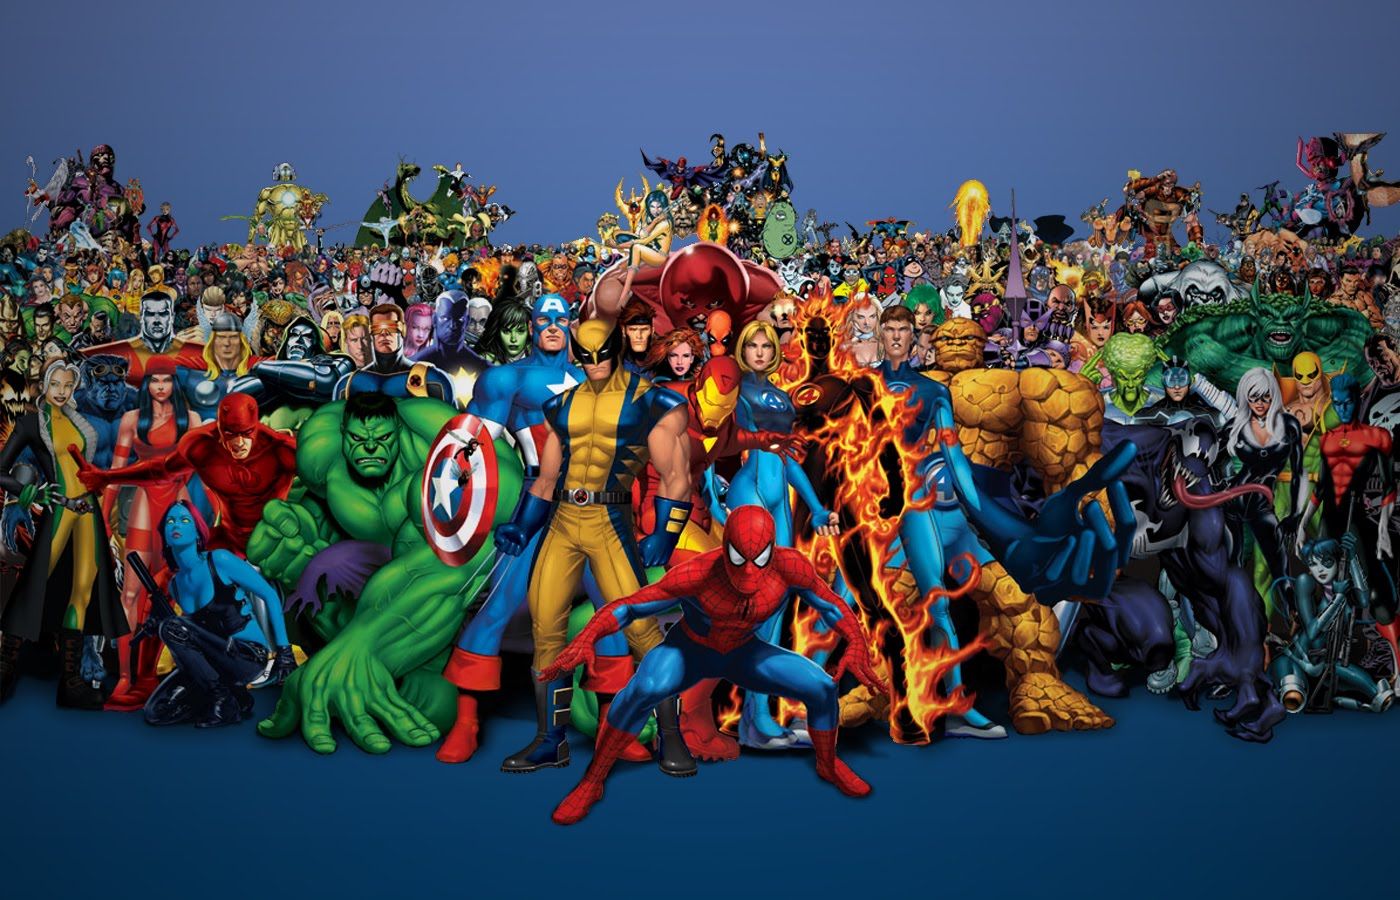 HD Marvel Wallpaper For Desktop 52dazhew Gallery